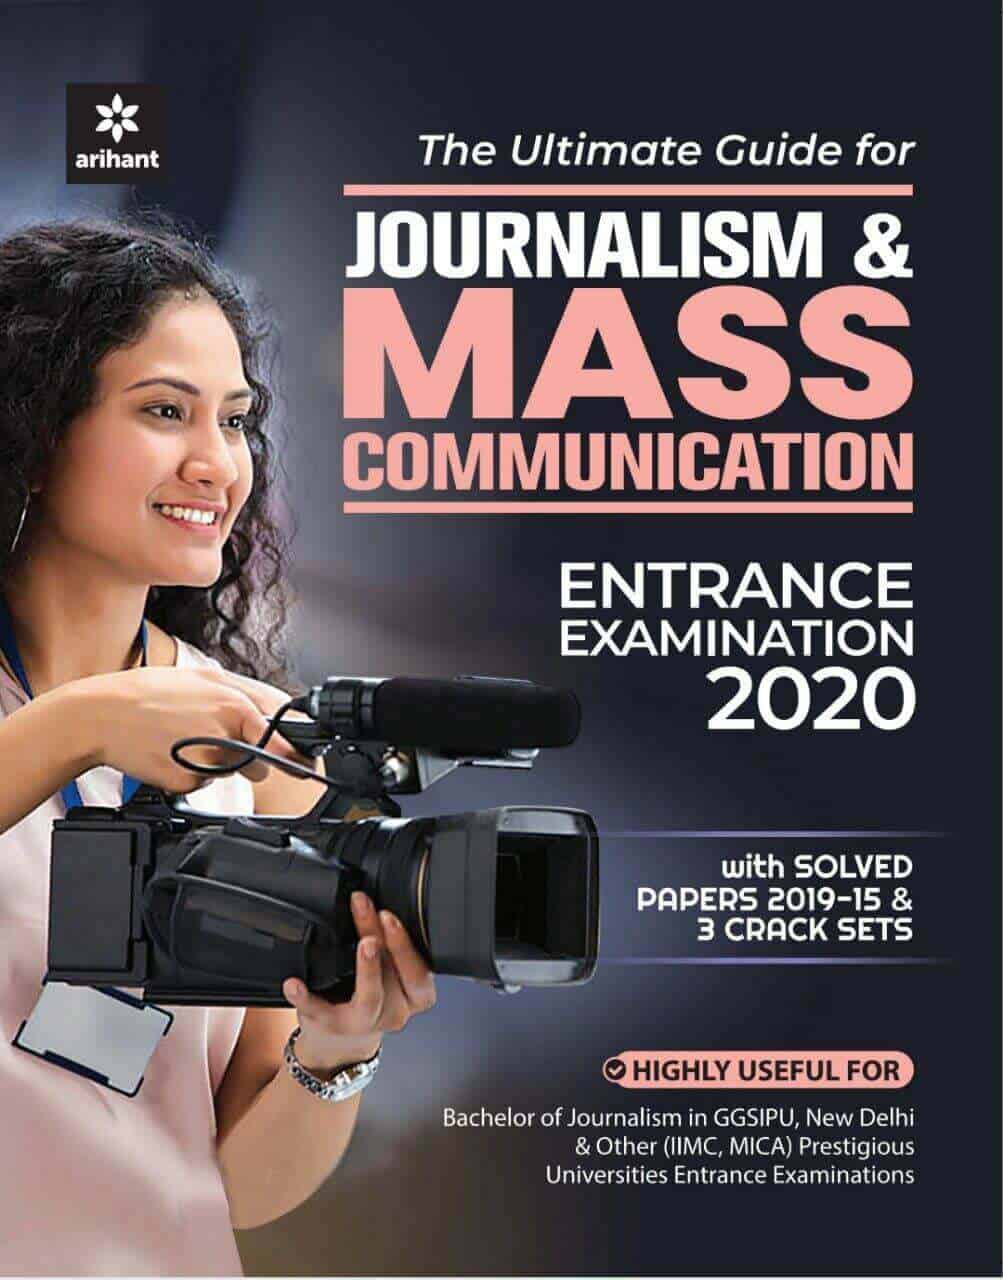 arihant-mass-communication-journalism-entrance-examination-by-d-mittal-pdf